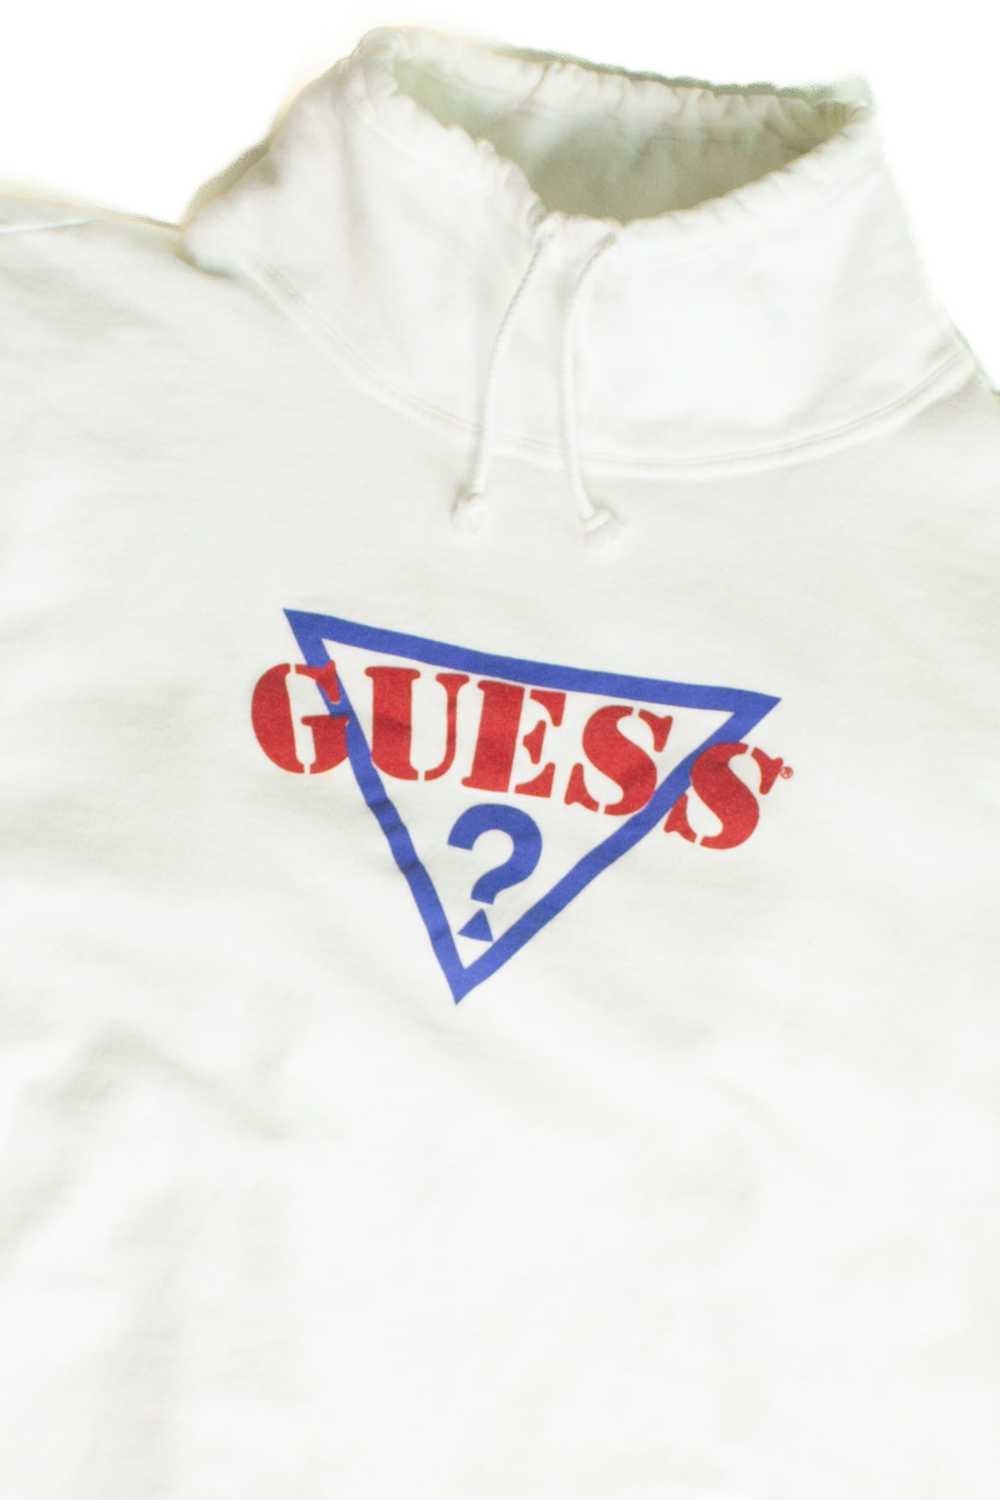 Vintage Guess Cowl Neck Sweatshirt (1990s) - image 1